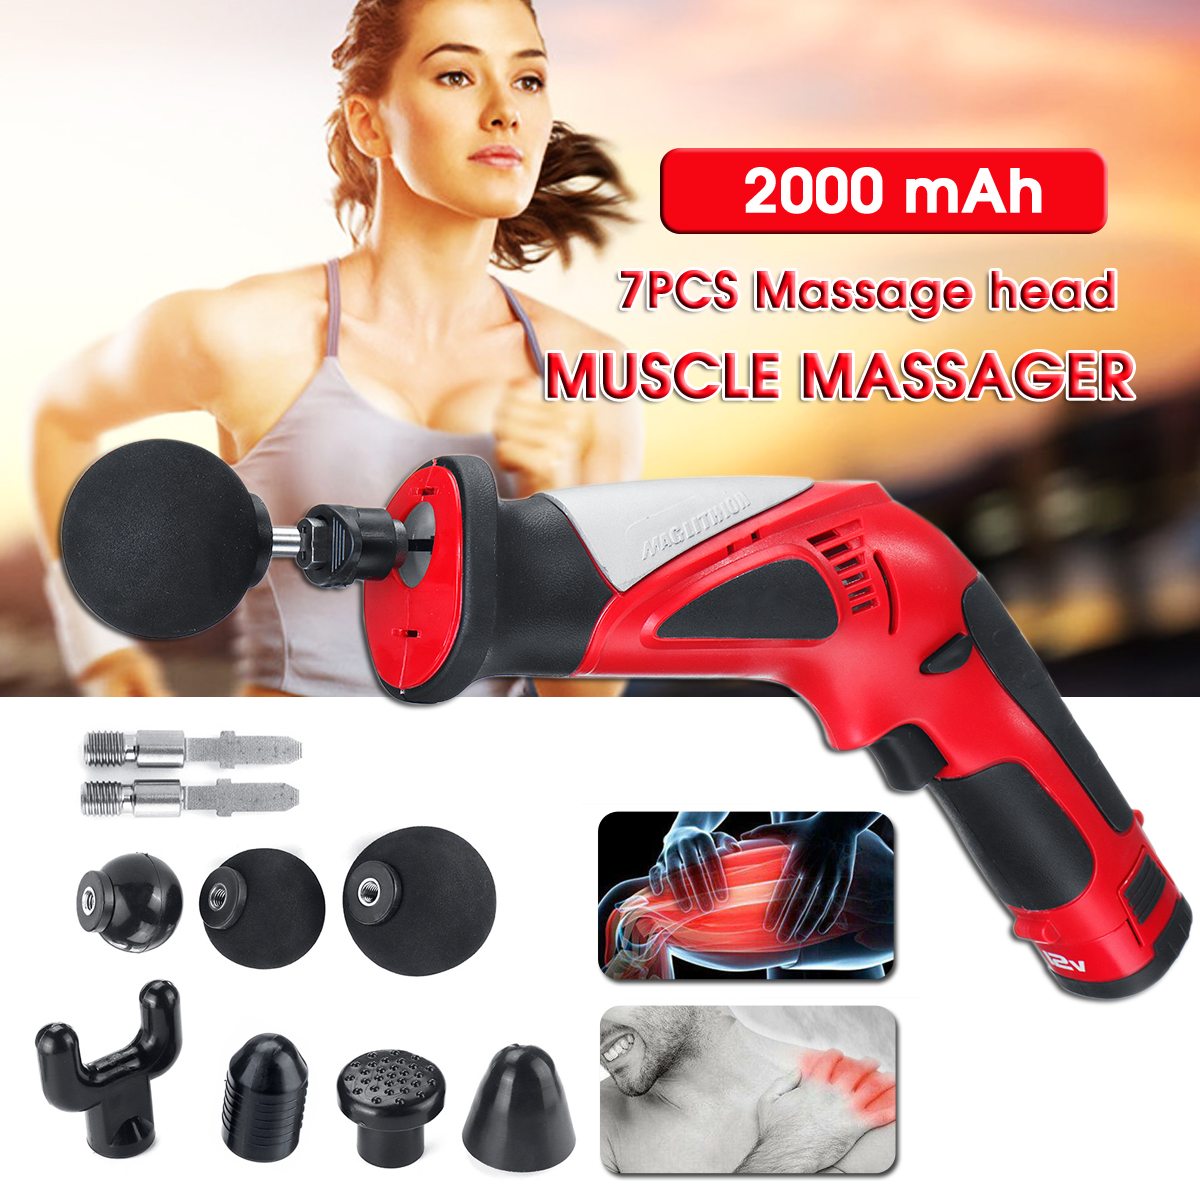 2000mAh-Vibration-Handheld-Muscle-Relaxation-Fascial-Muscle-Massager-Fascial-Relaxation-for-Fitness--1473480